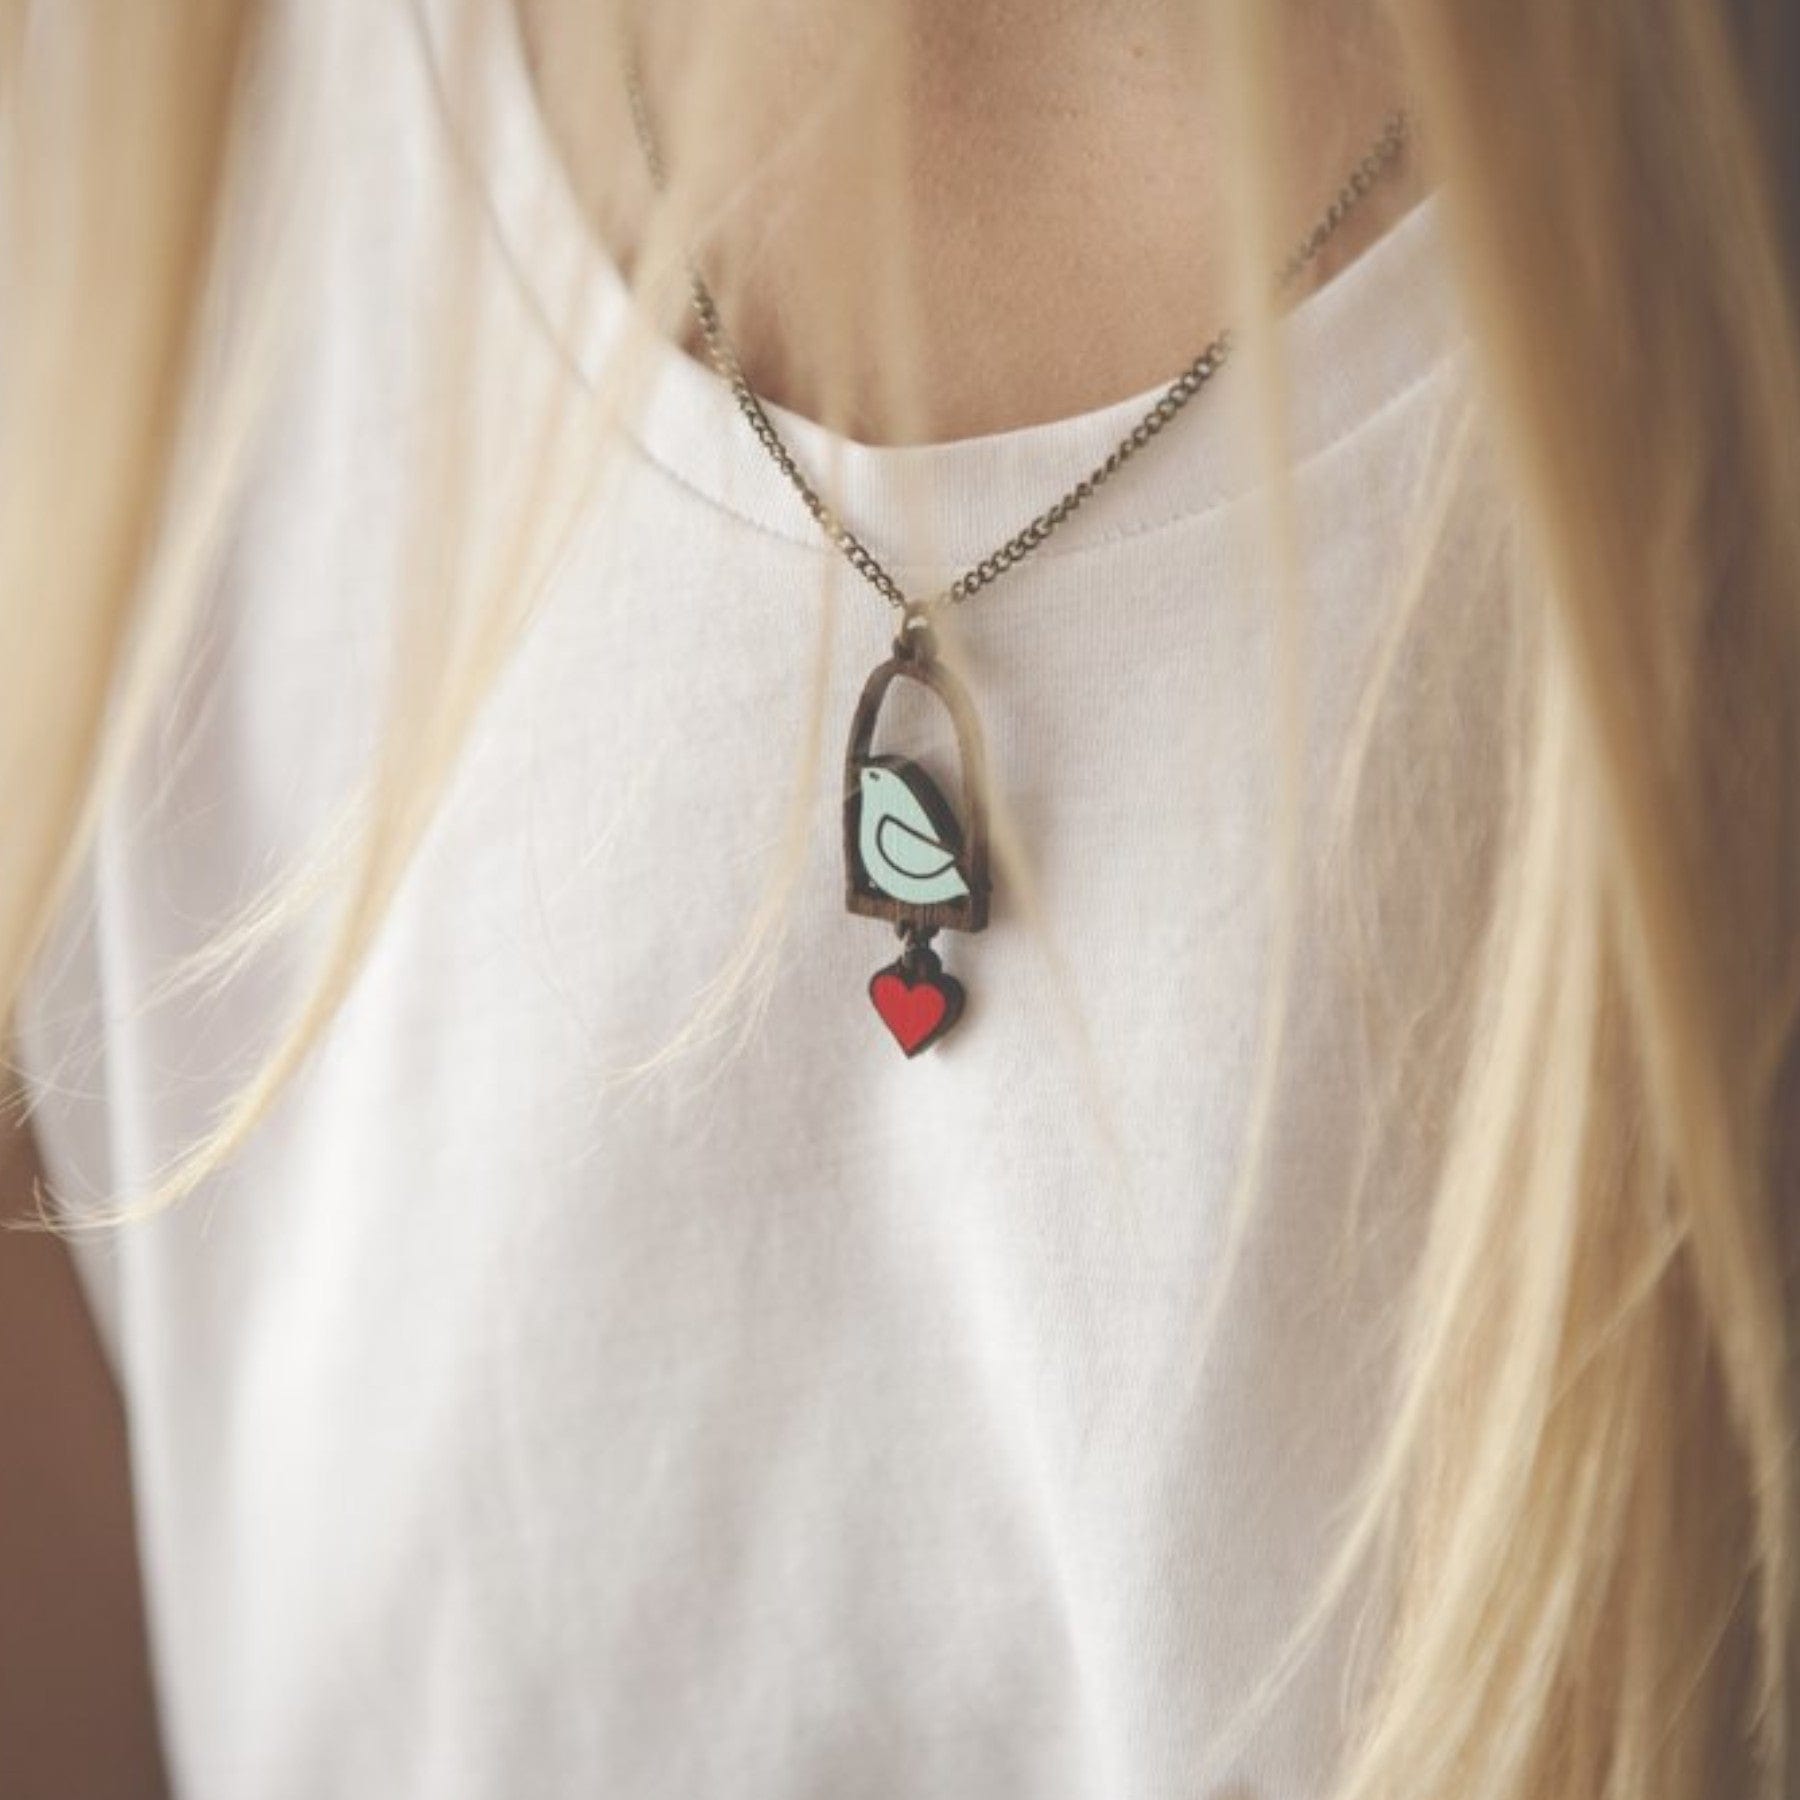 Blue bird & love necklace